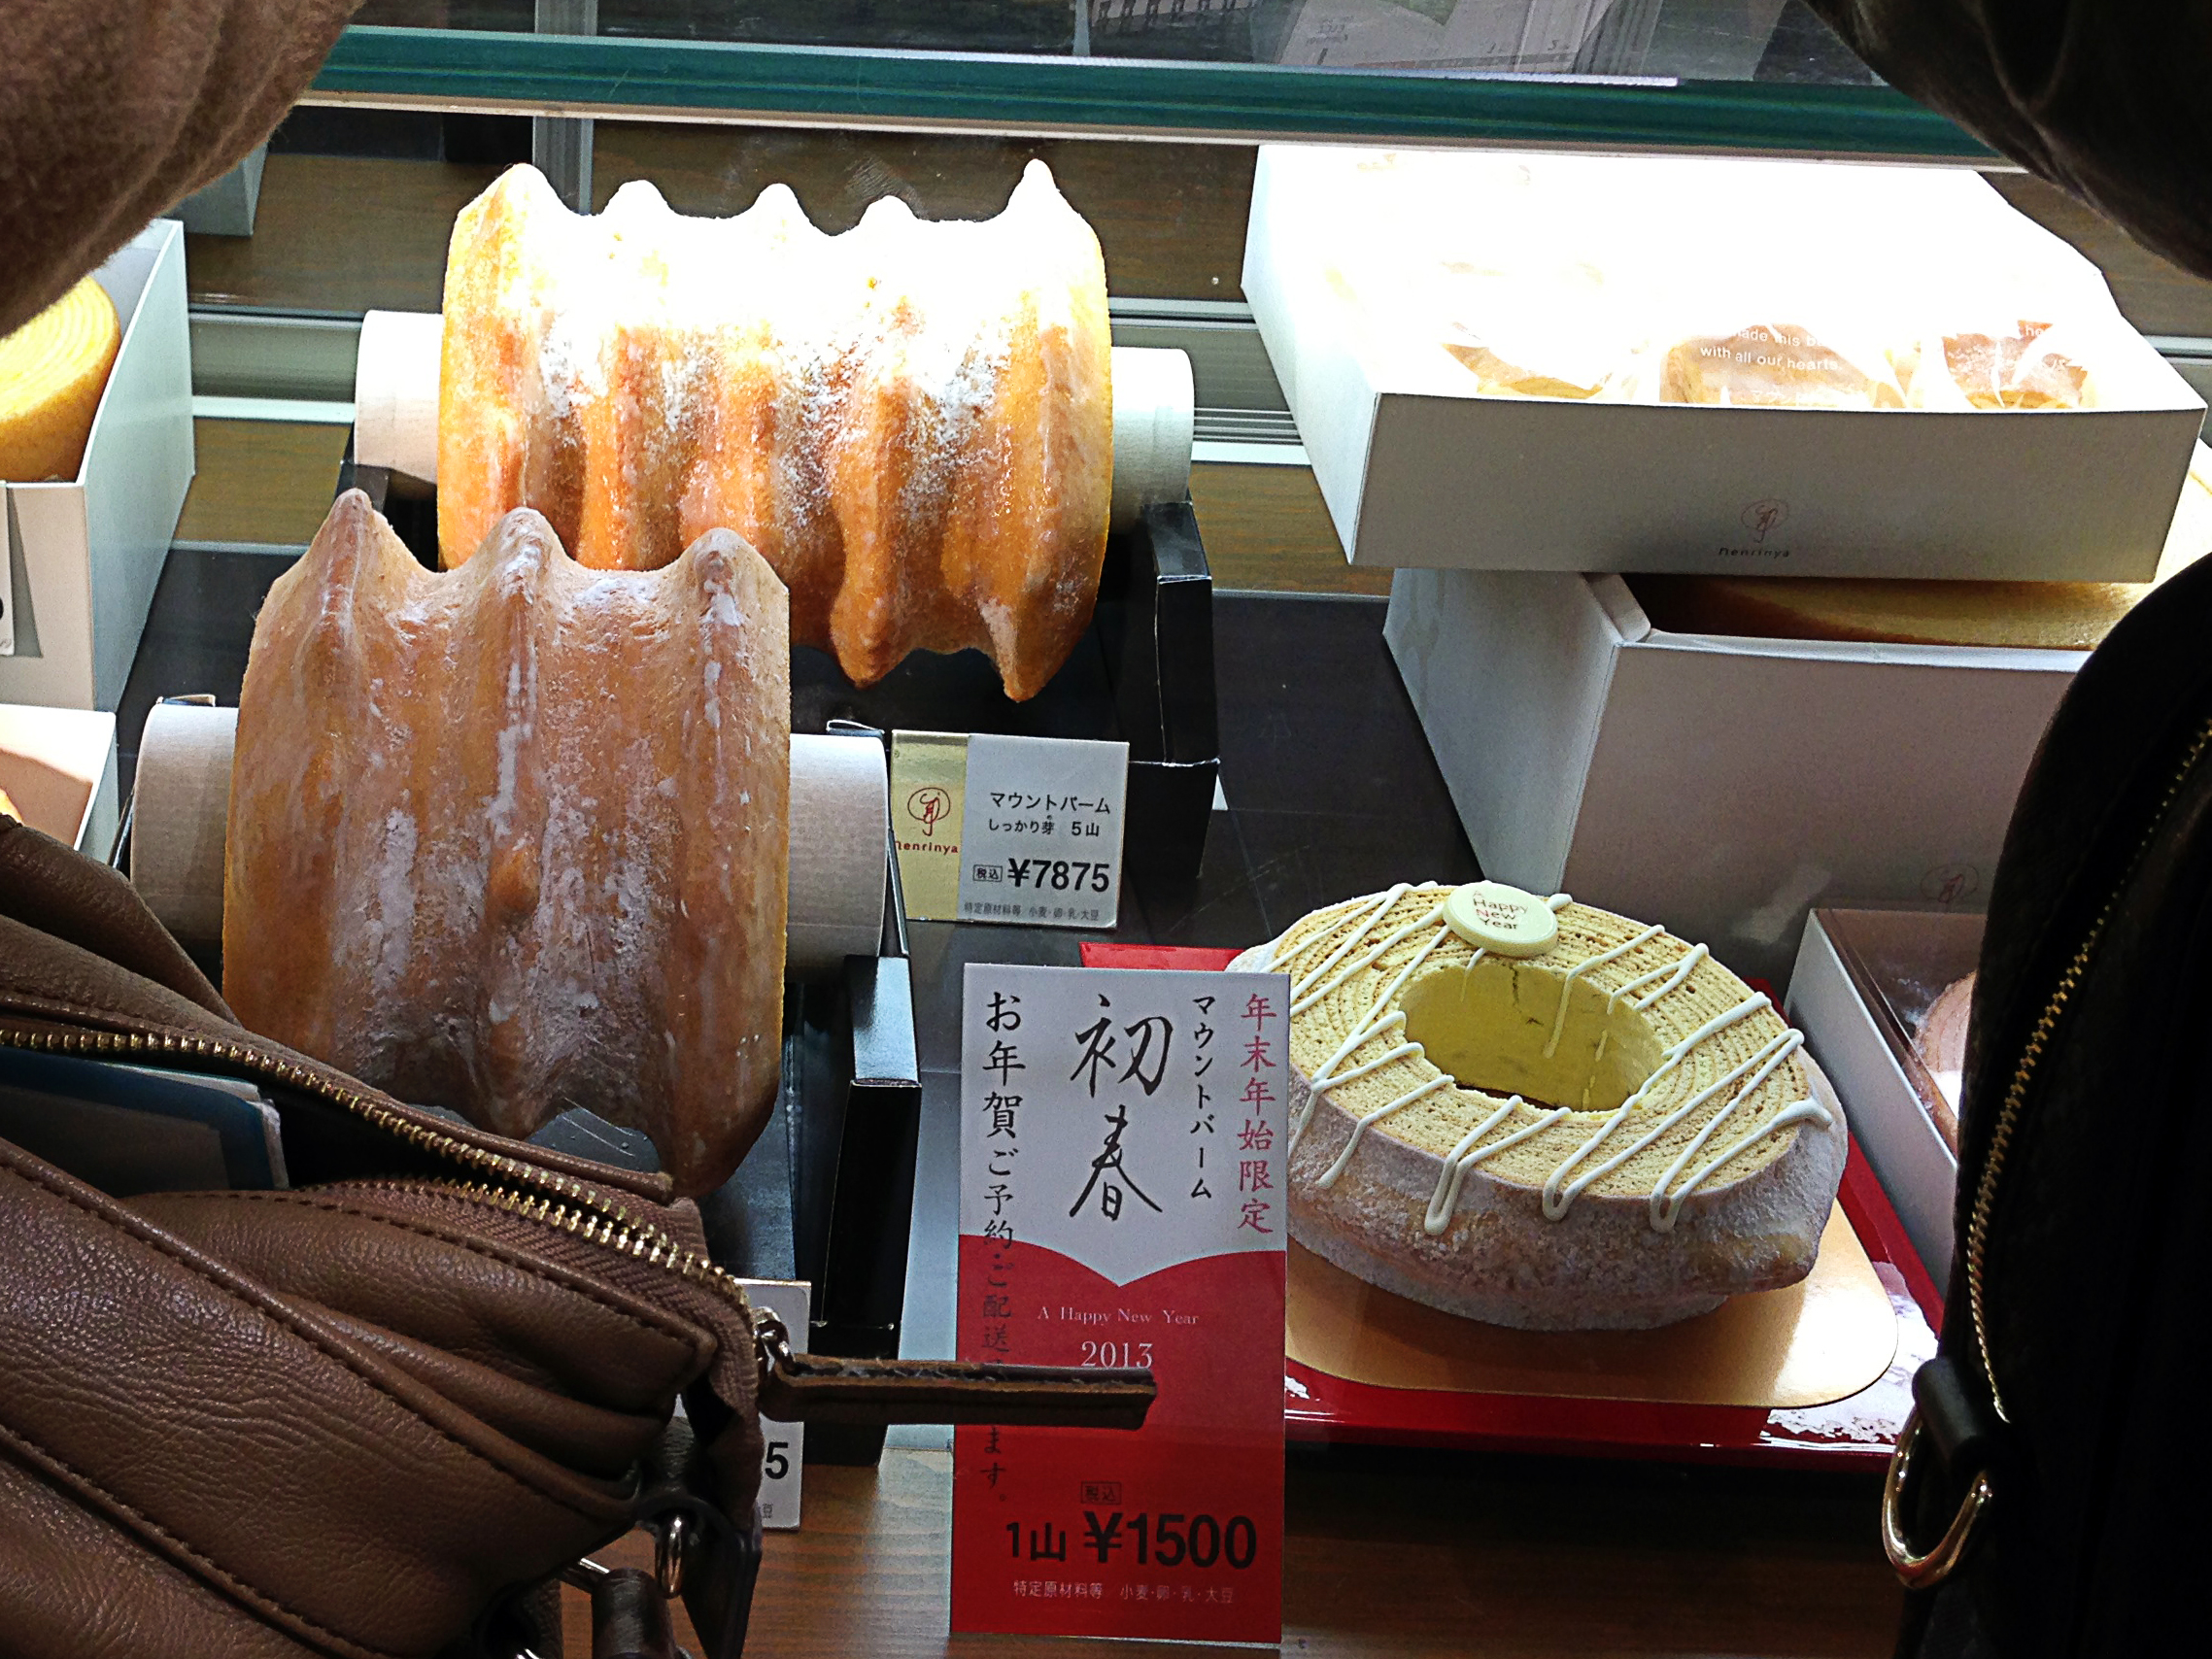 Baumkuchen display at Nenrinya in Tokyo. Photo by alphacityguides.